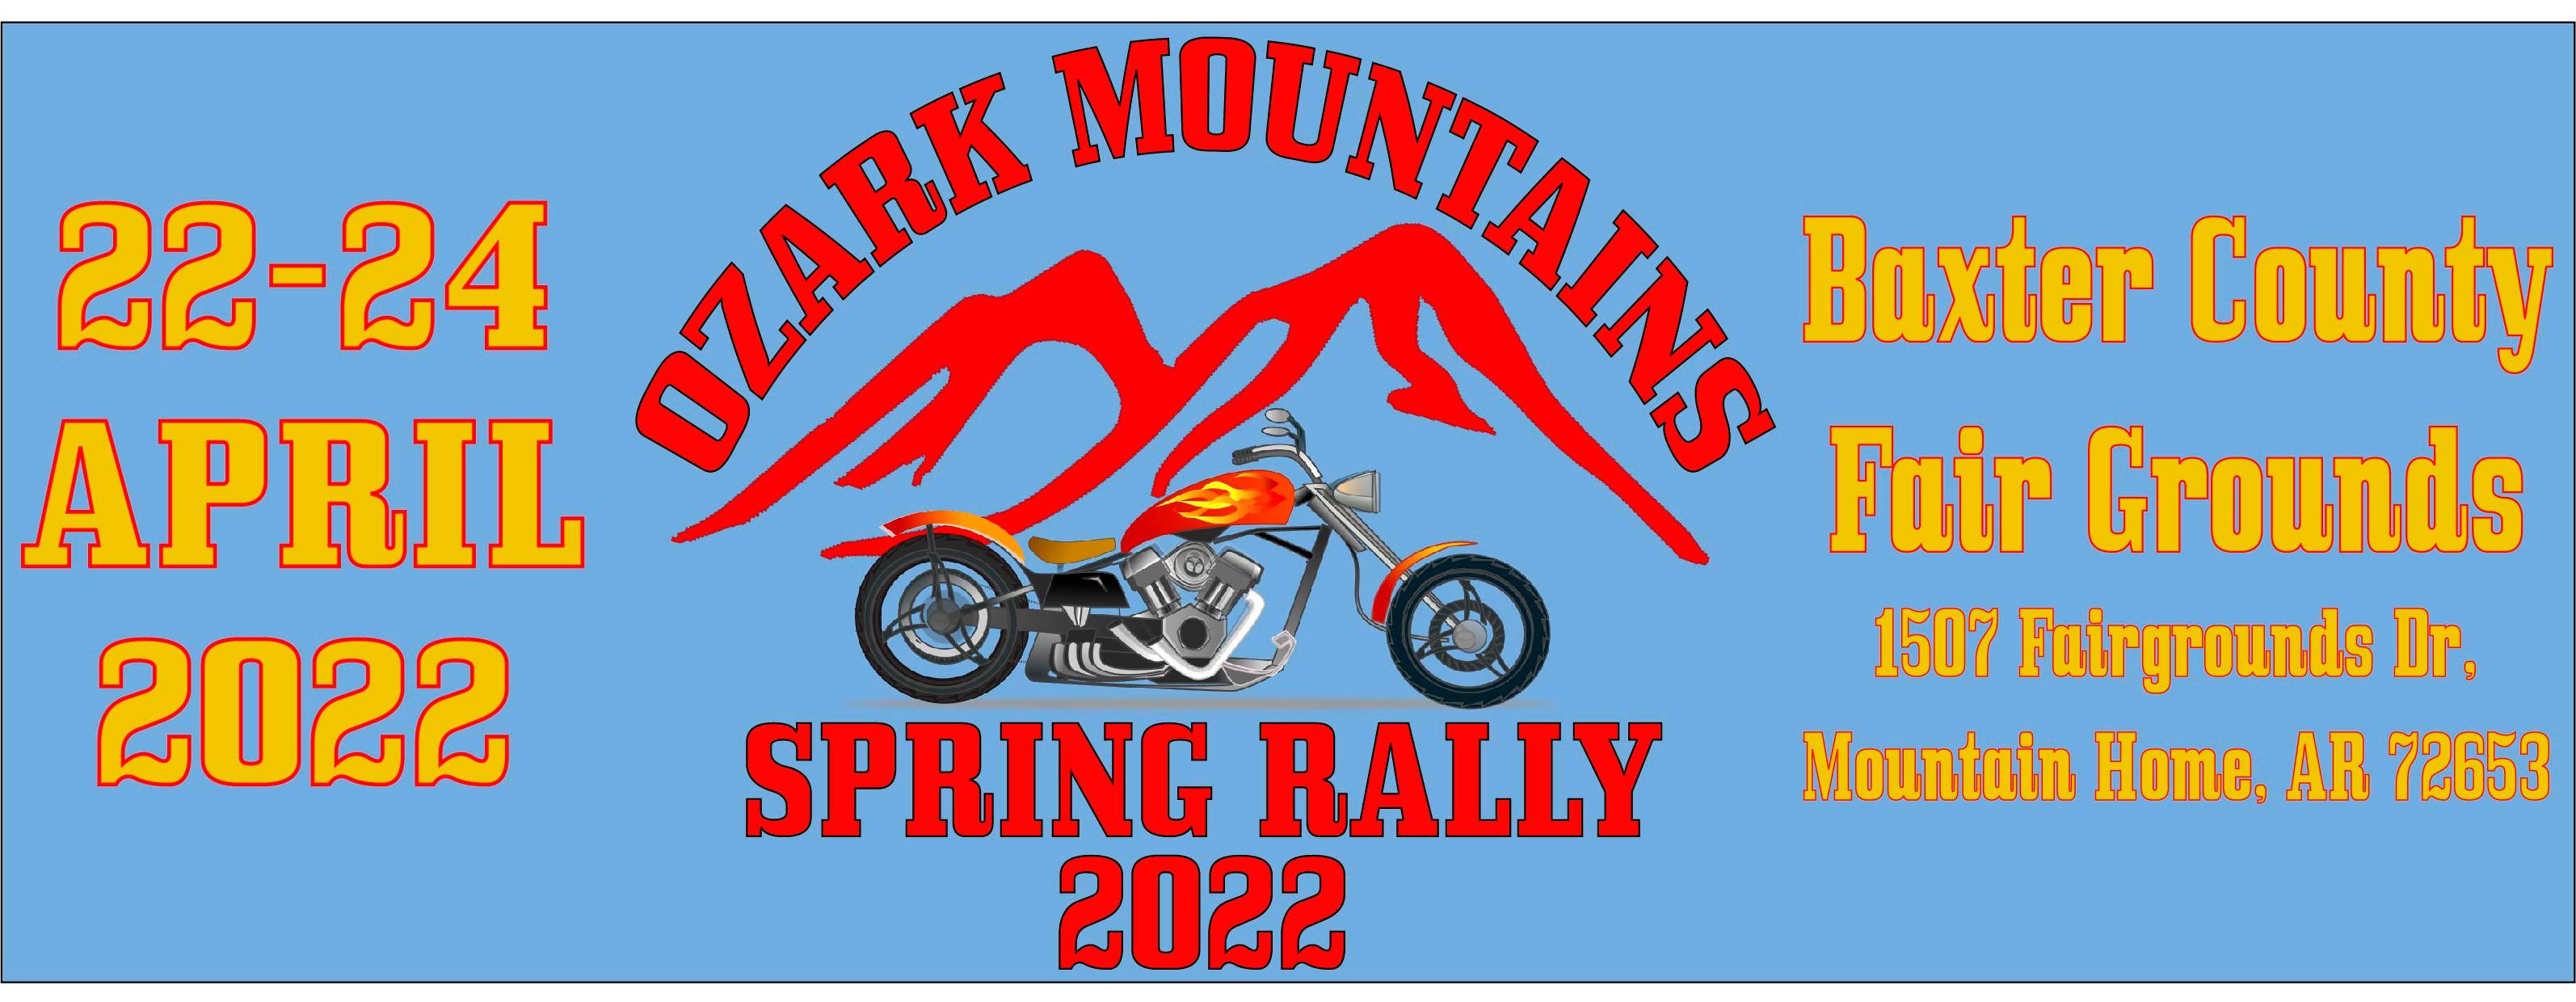 Ozark Mountain Spring Rally 2022 Born To Ride Motorcycle Magazine